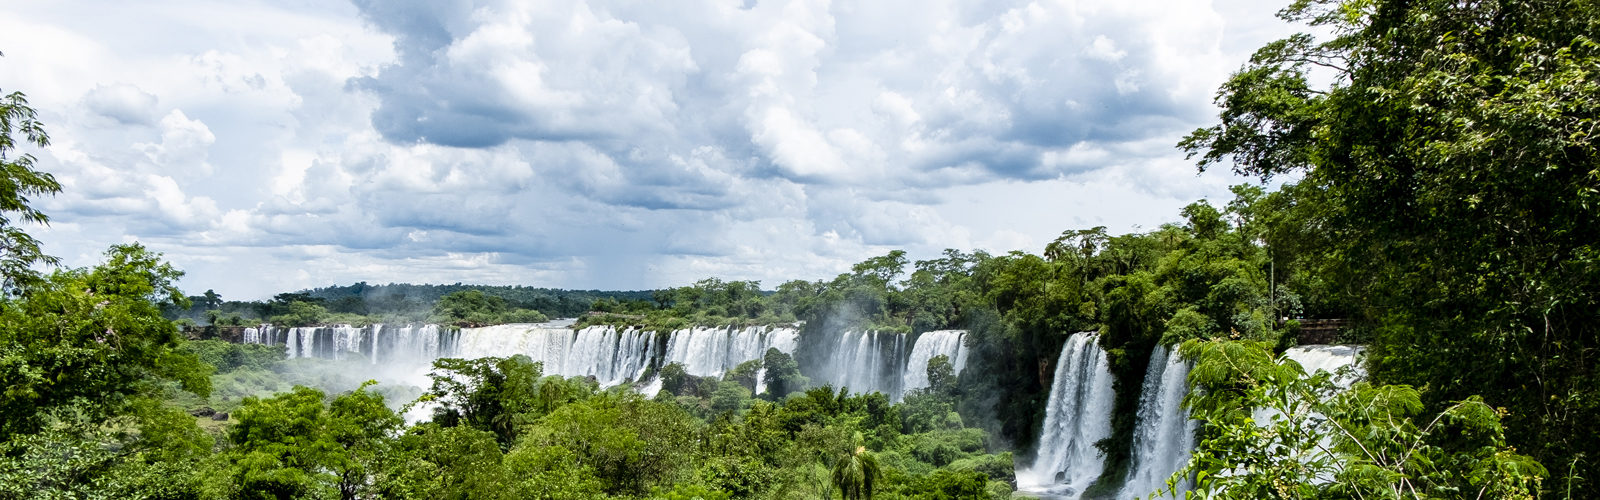 Iguassu Falls seen from the Argentina side